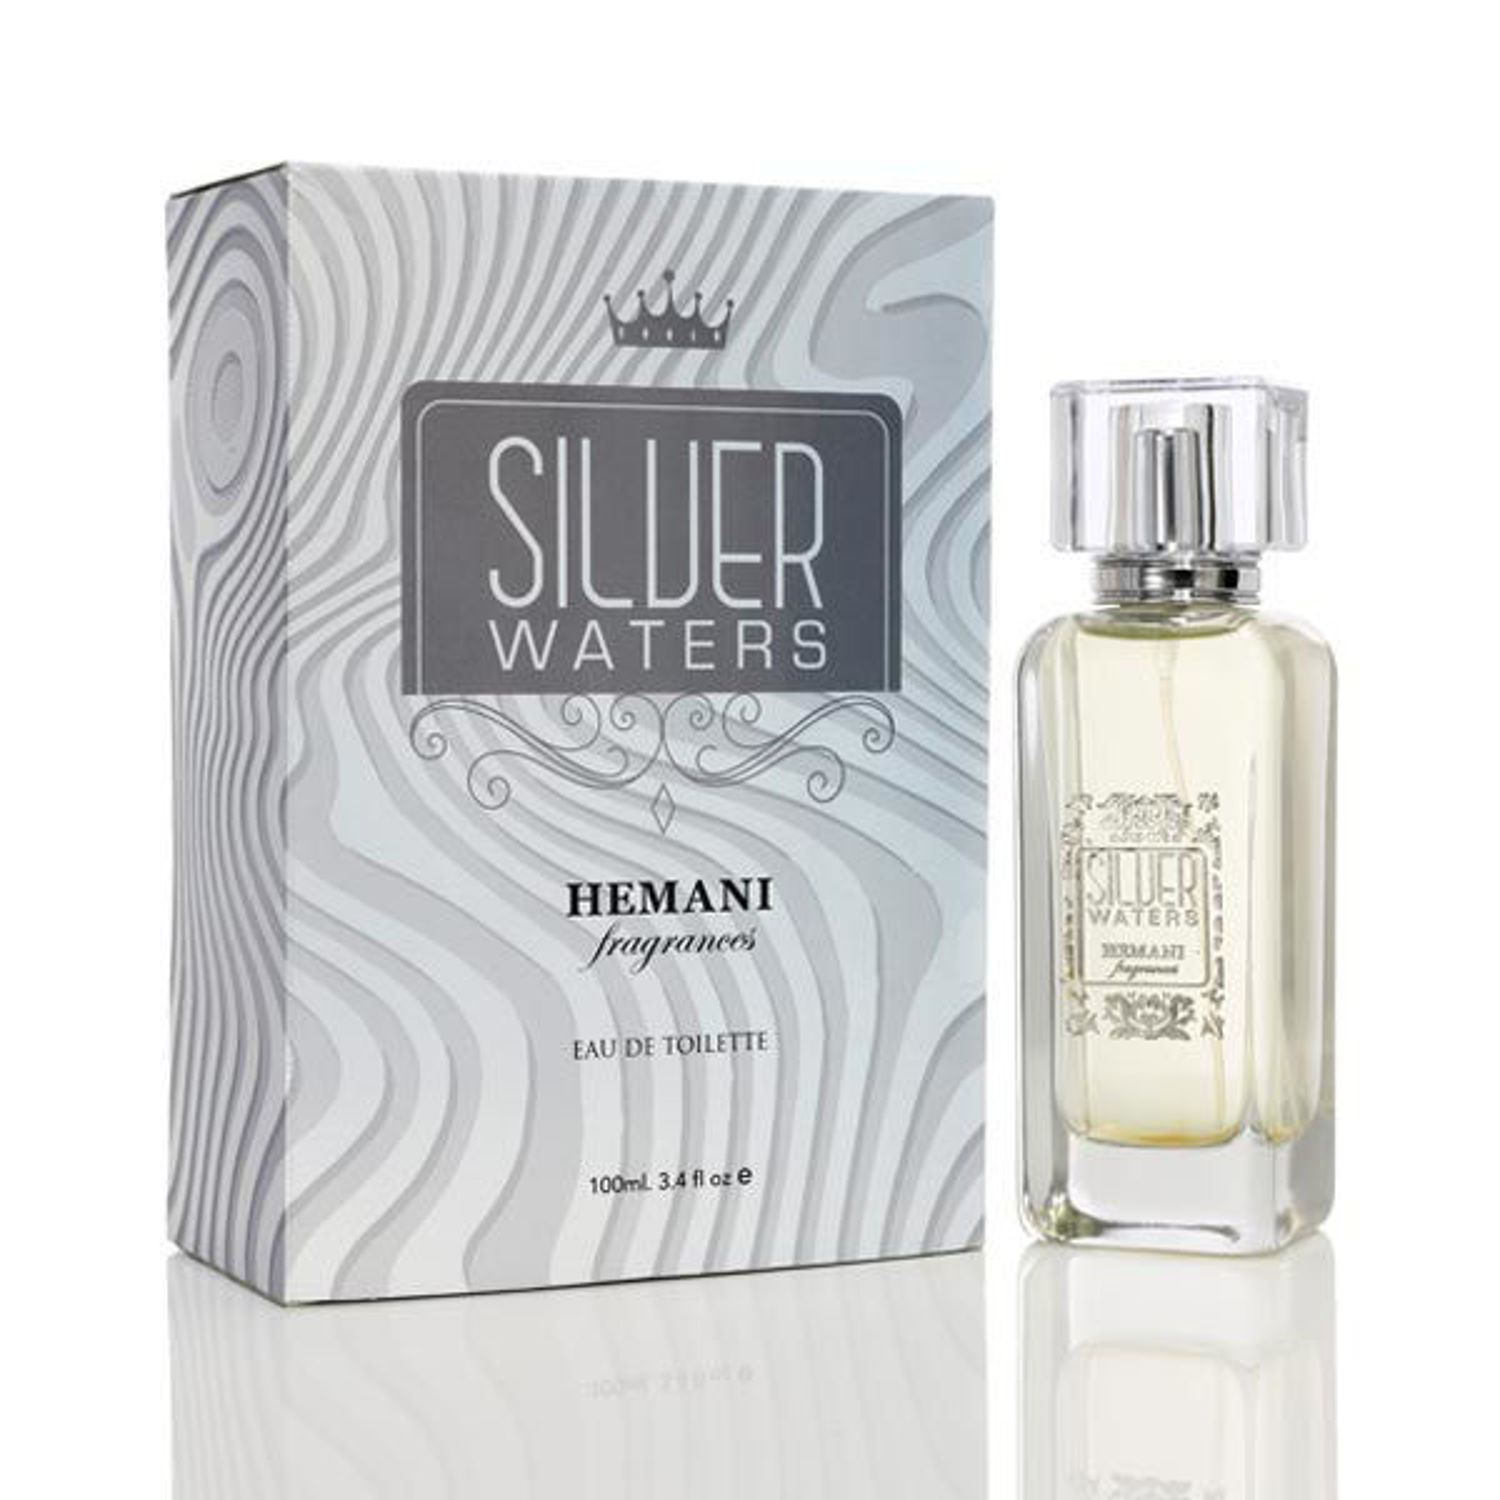 Hemani Silver Waters Perfume for Men & Women